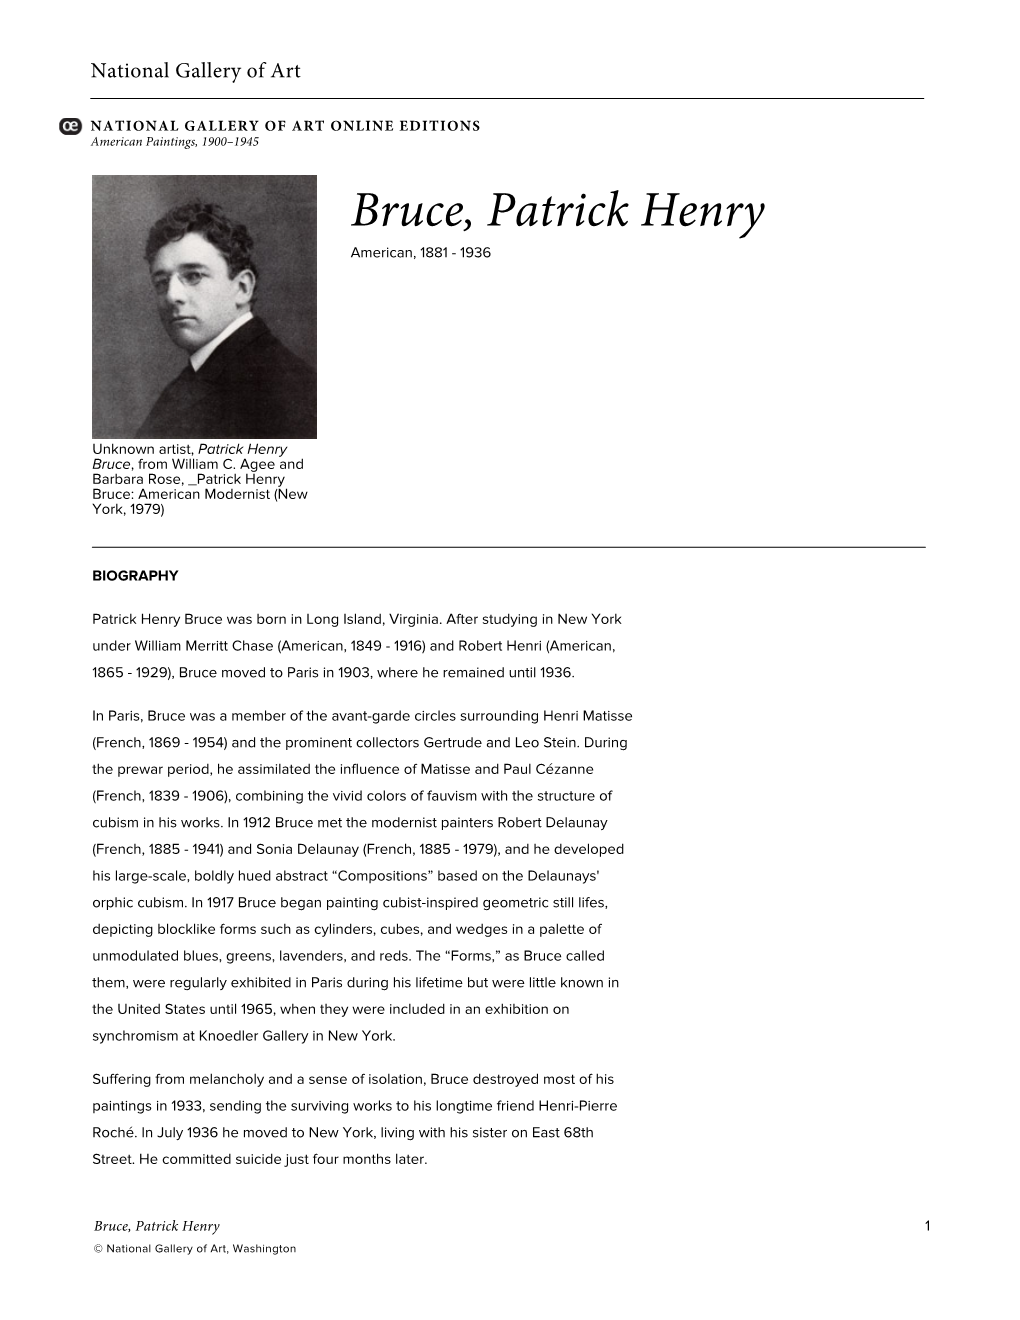 Bruce, Patrick Henry American, 1881 - 1936